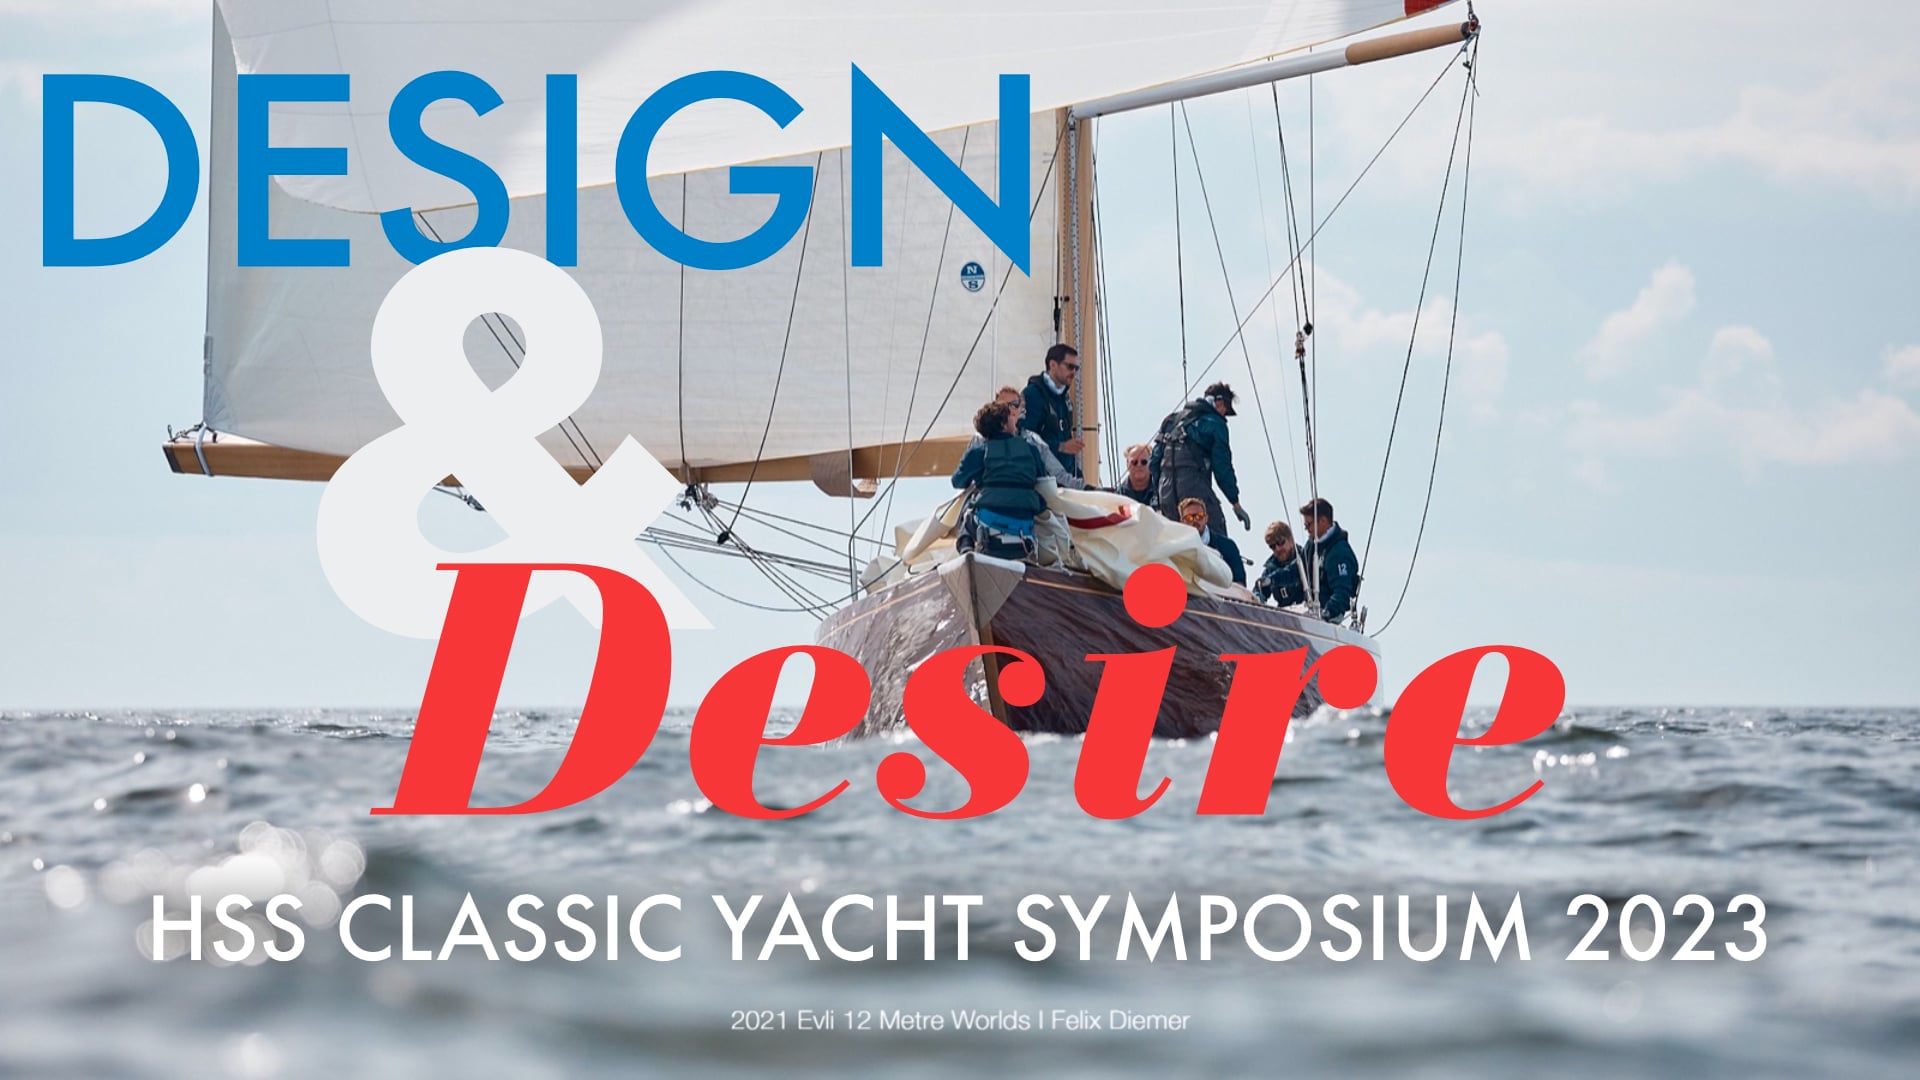 HSS Classic Yacht Symposium 10th Edition 2023 on Vimeo